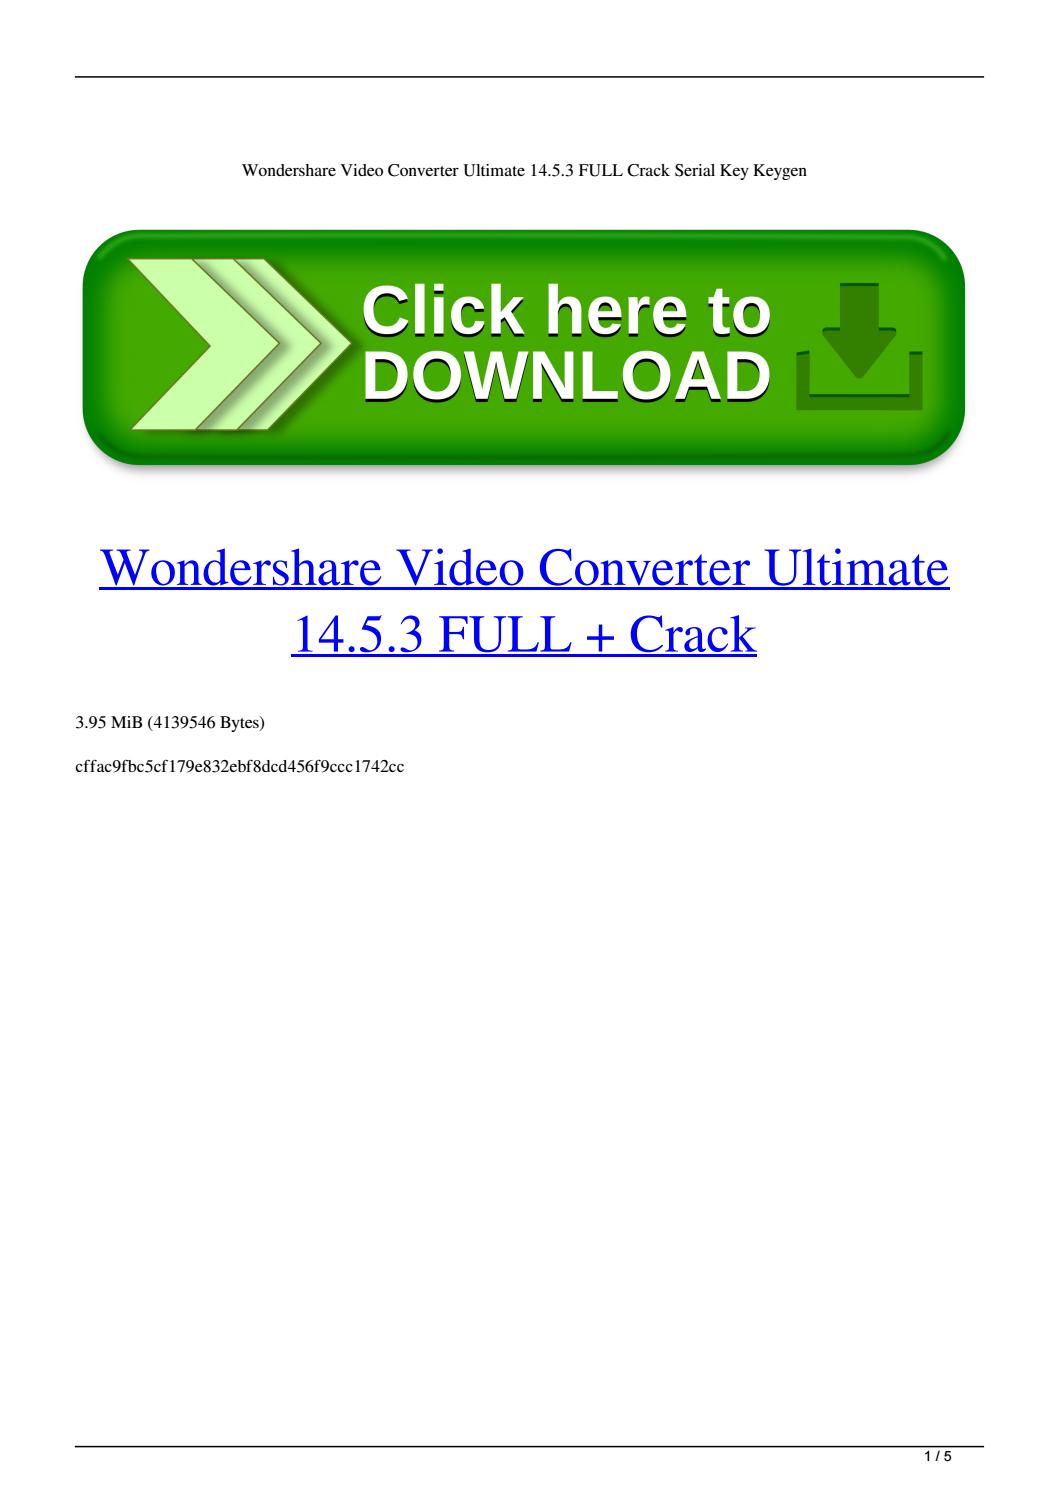 Wondershare Video Converter Registration Code Mac Download